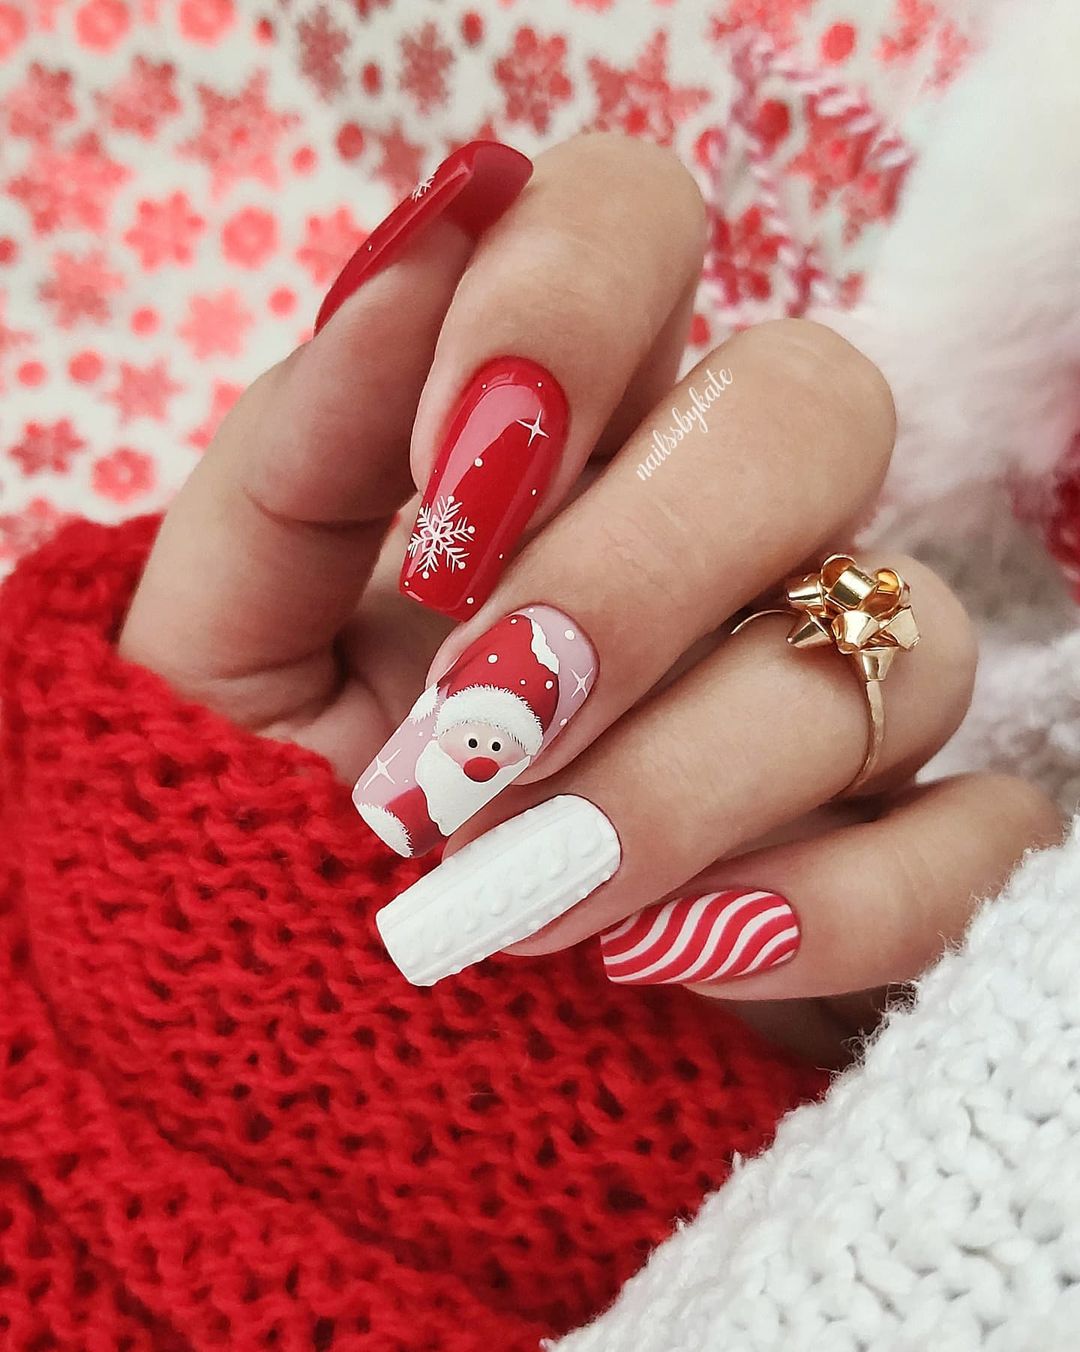 Rode en witte nagels met santa design